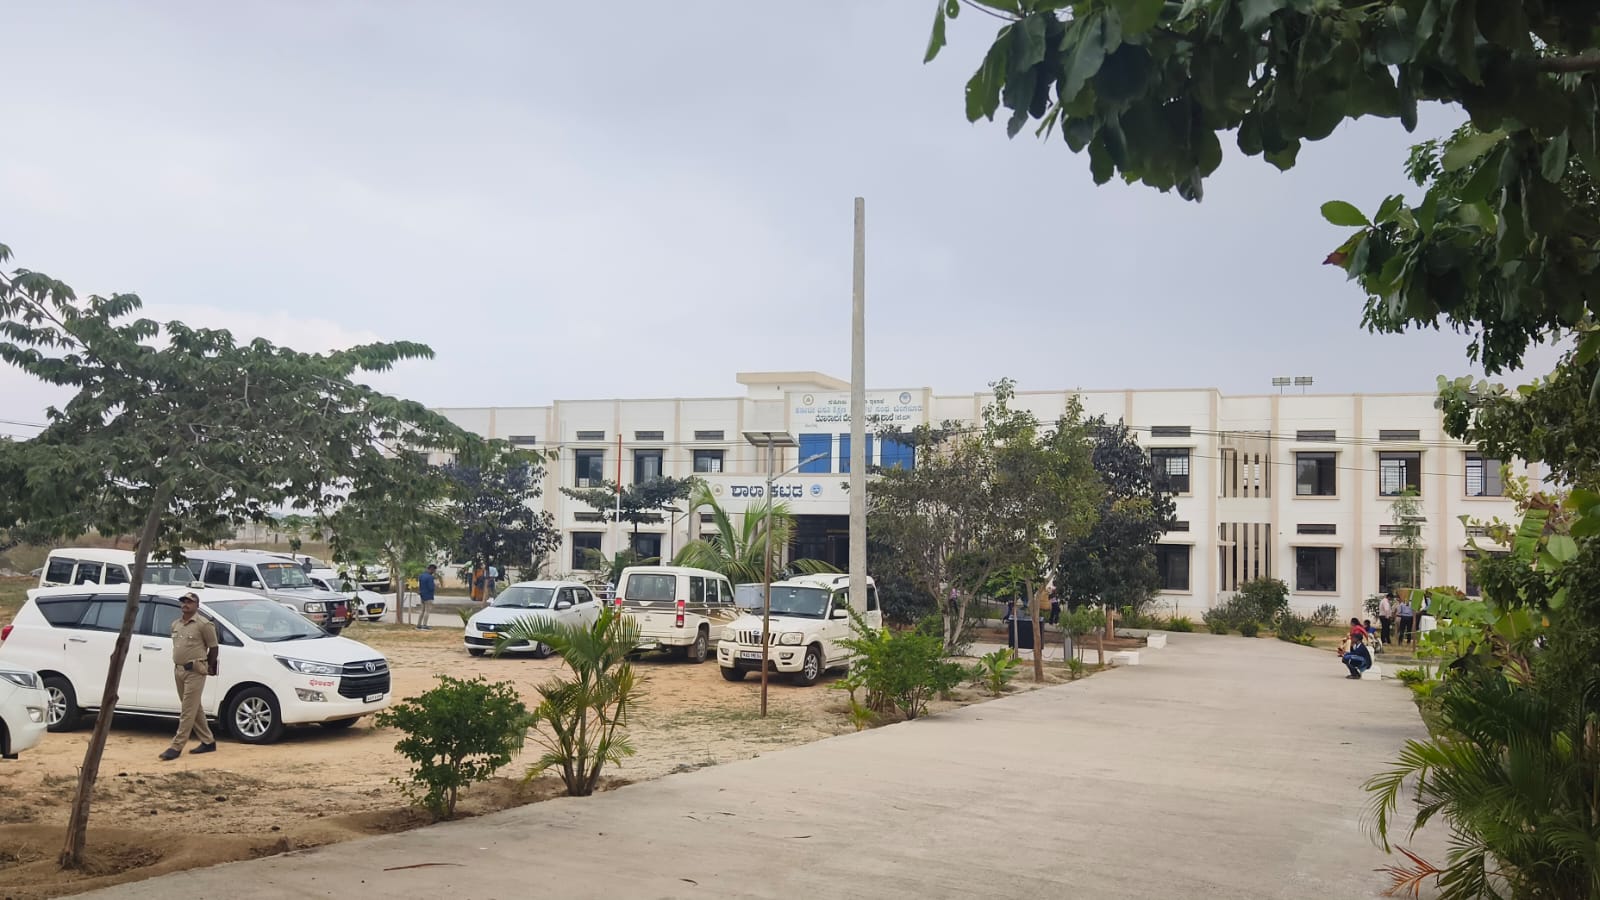 The Moraji Desai Residential School in Yaluvahalli in Malur taluk in Kolar district